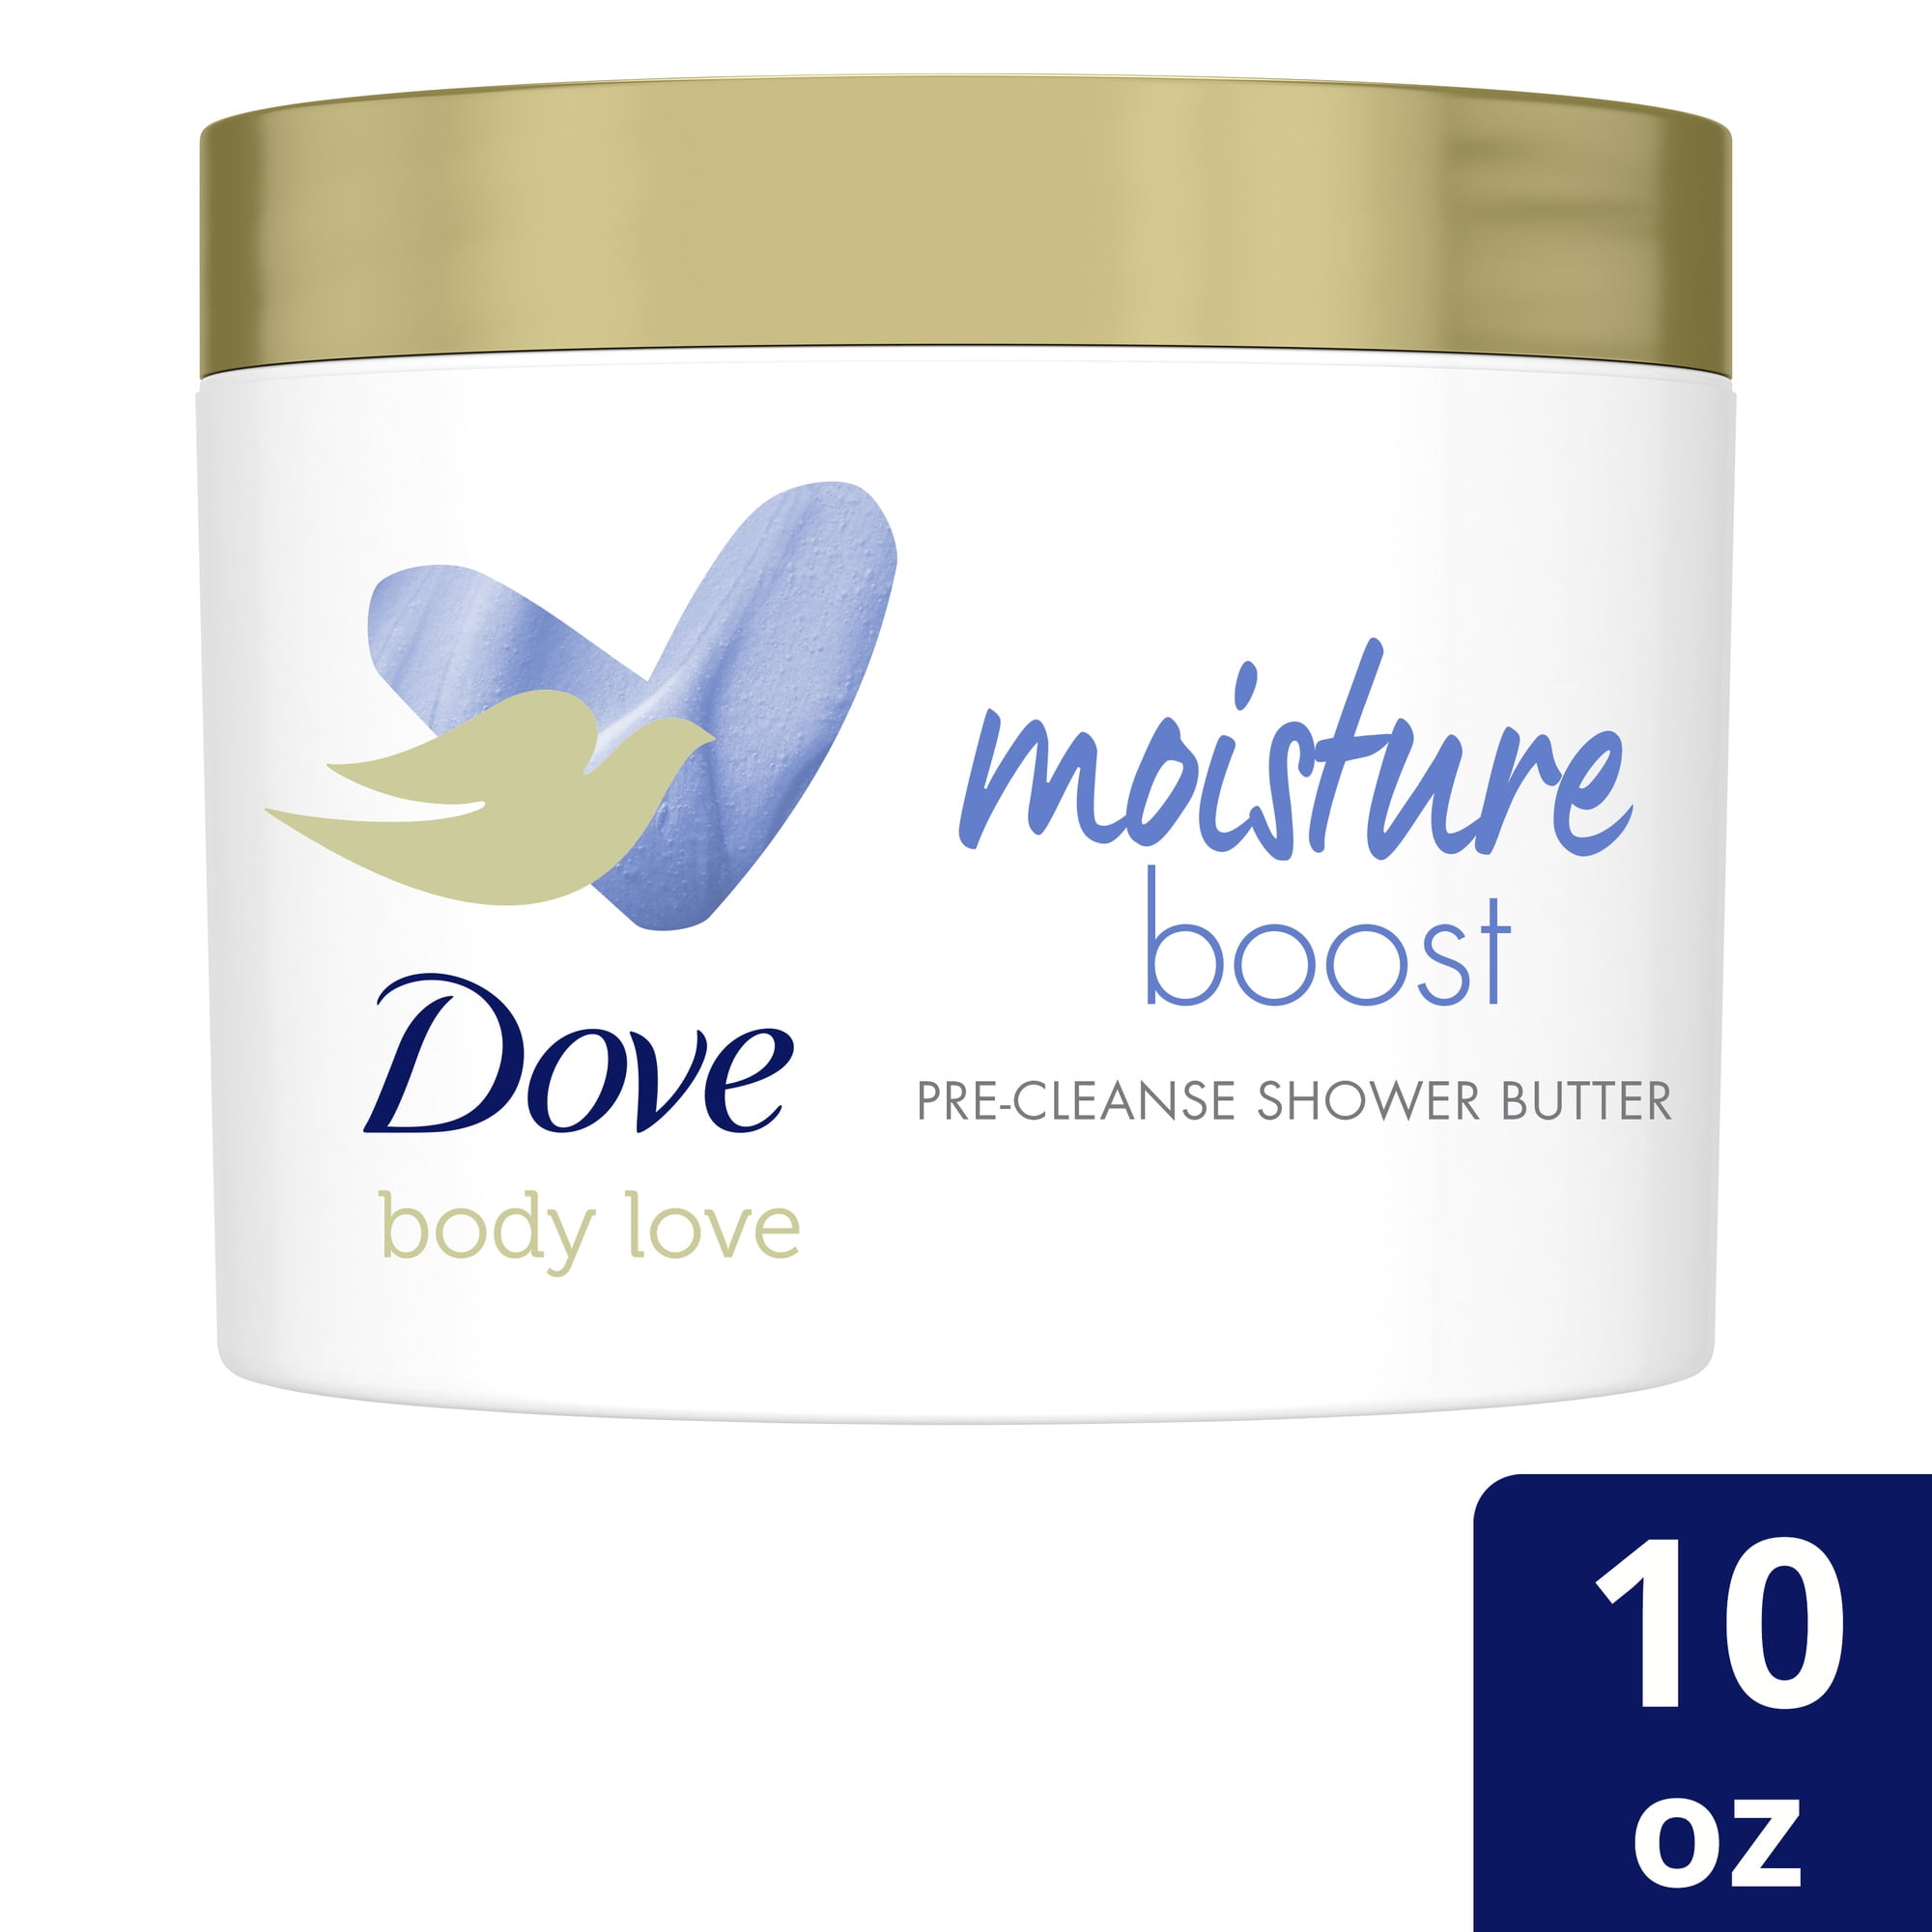 Dove Body Love Moisture Boost Pre-Cleanse Shower Butter, 10 oz